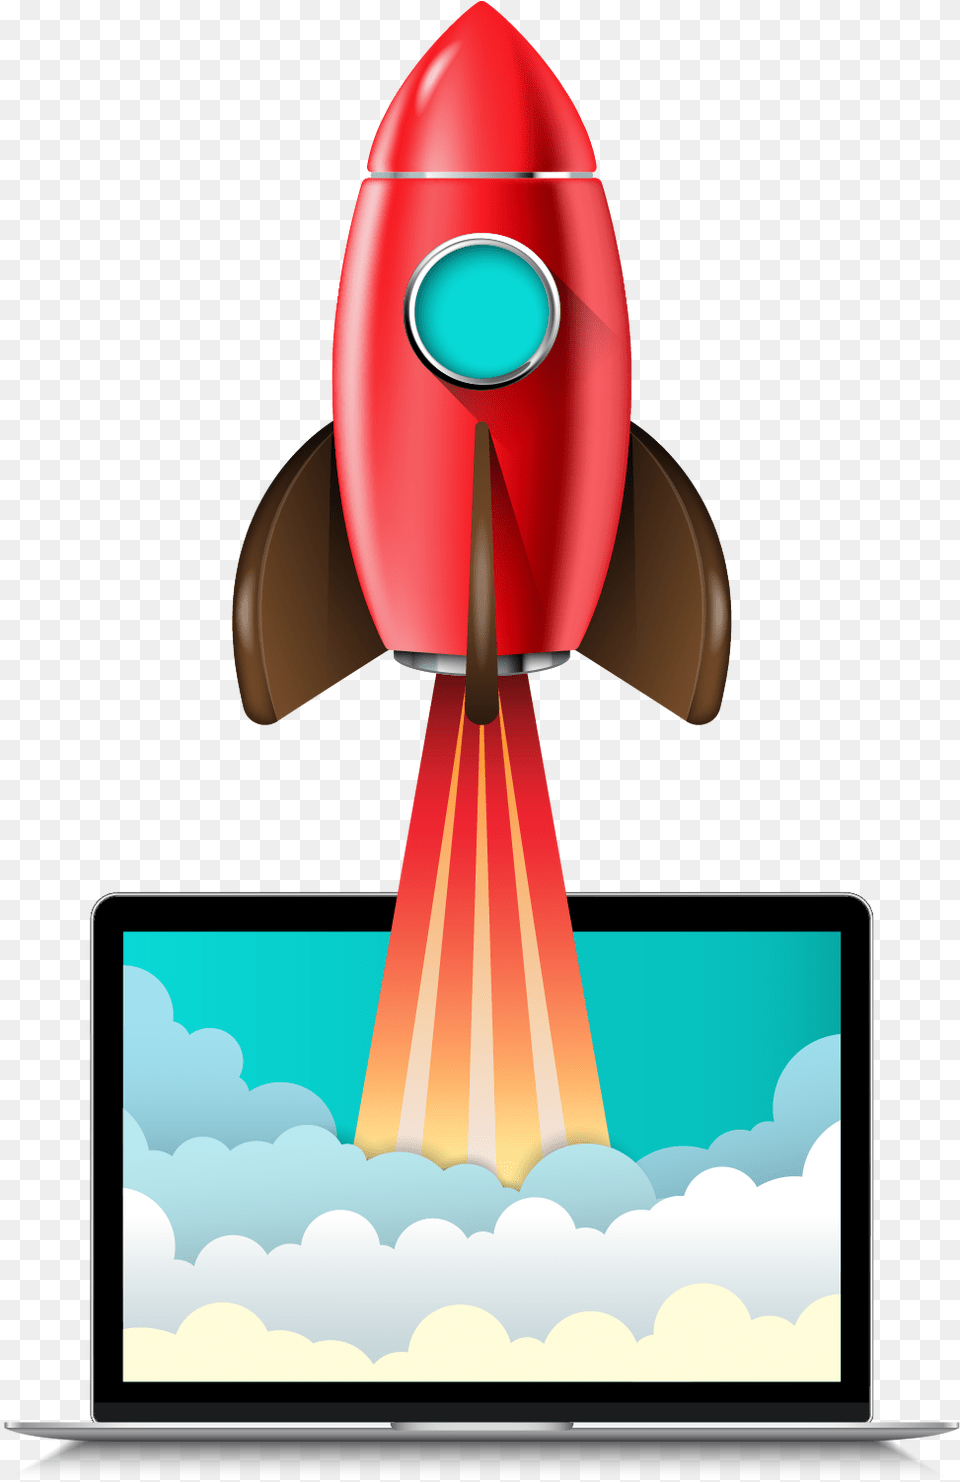 Software Development Clipart Career Development Illustration, Rocket, Weapon, Launch, Aircraft Png Image